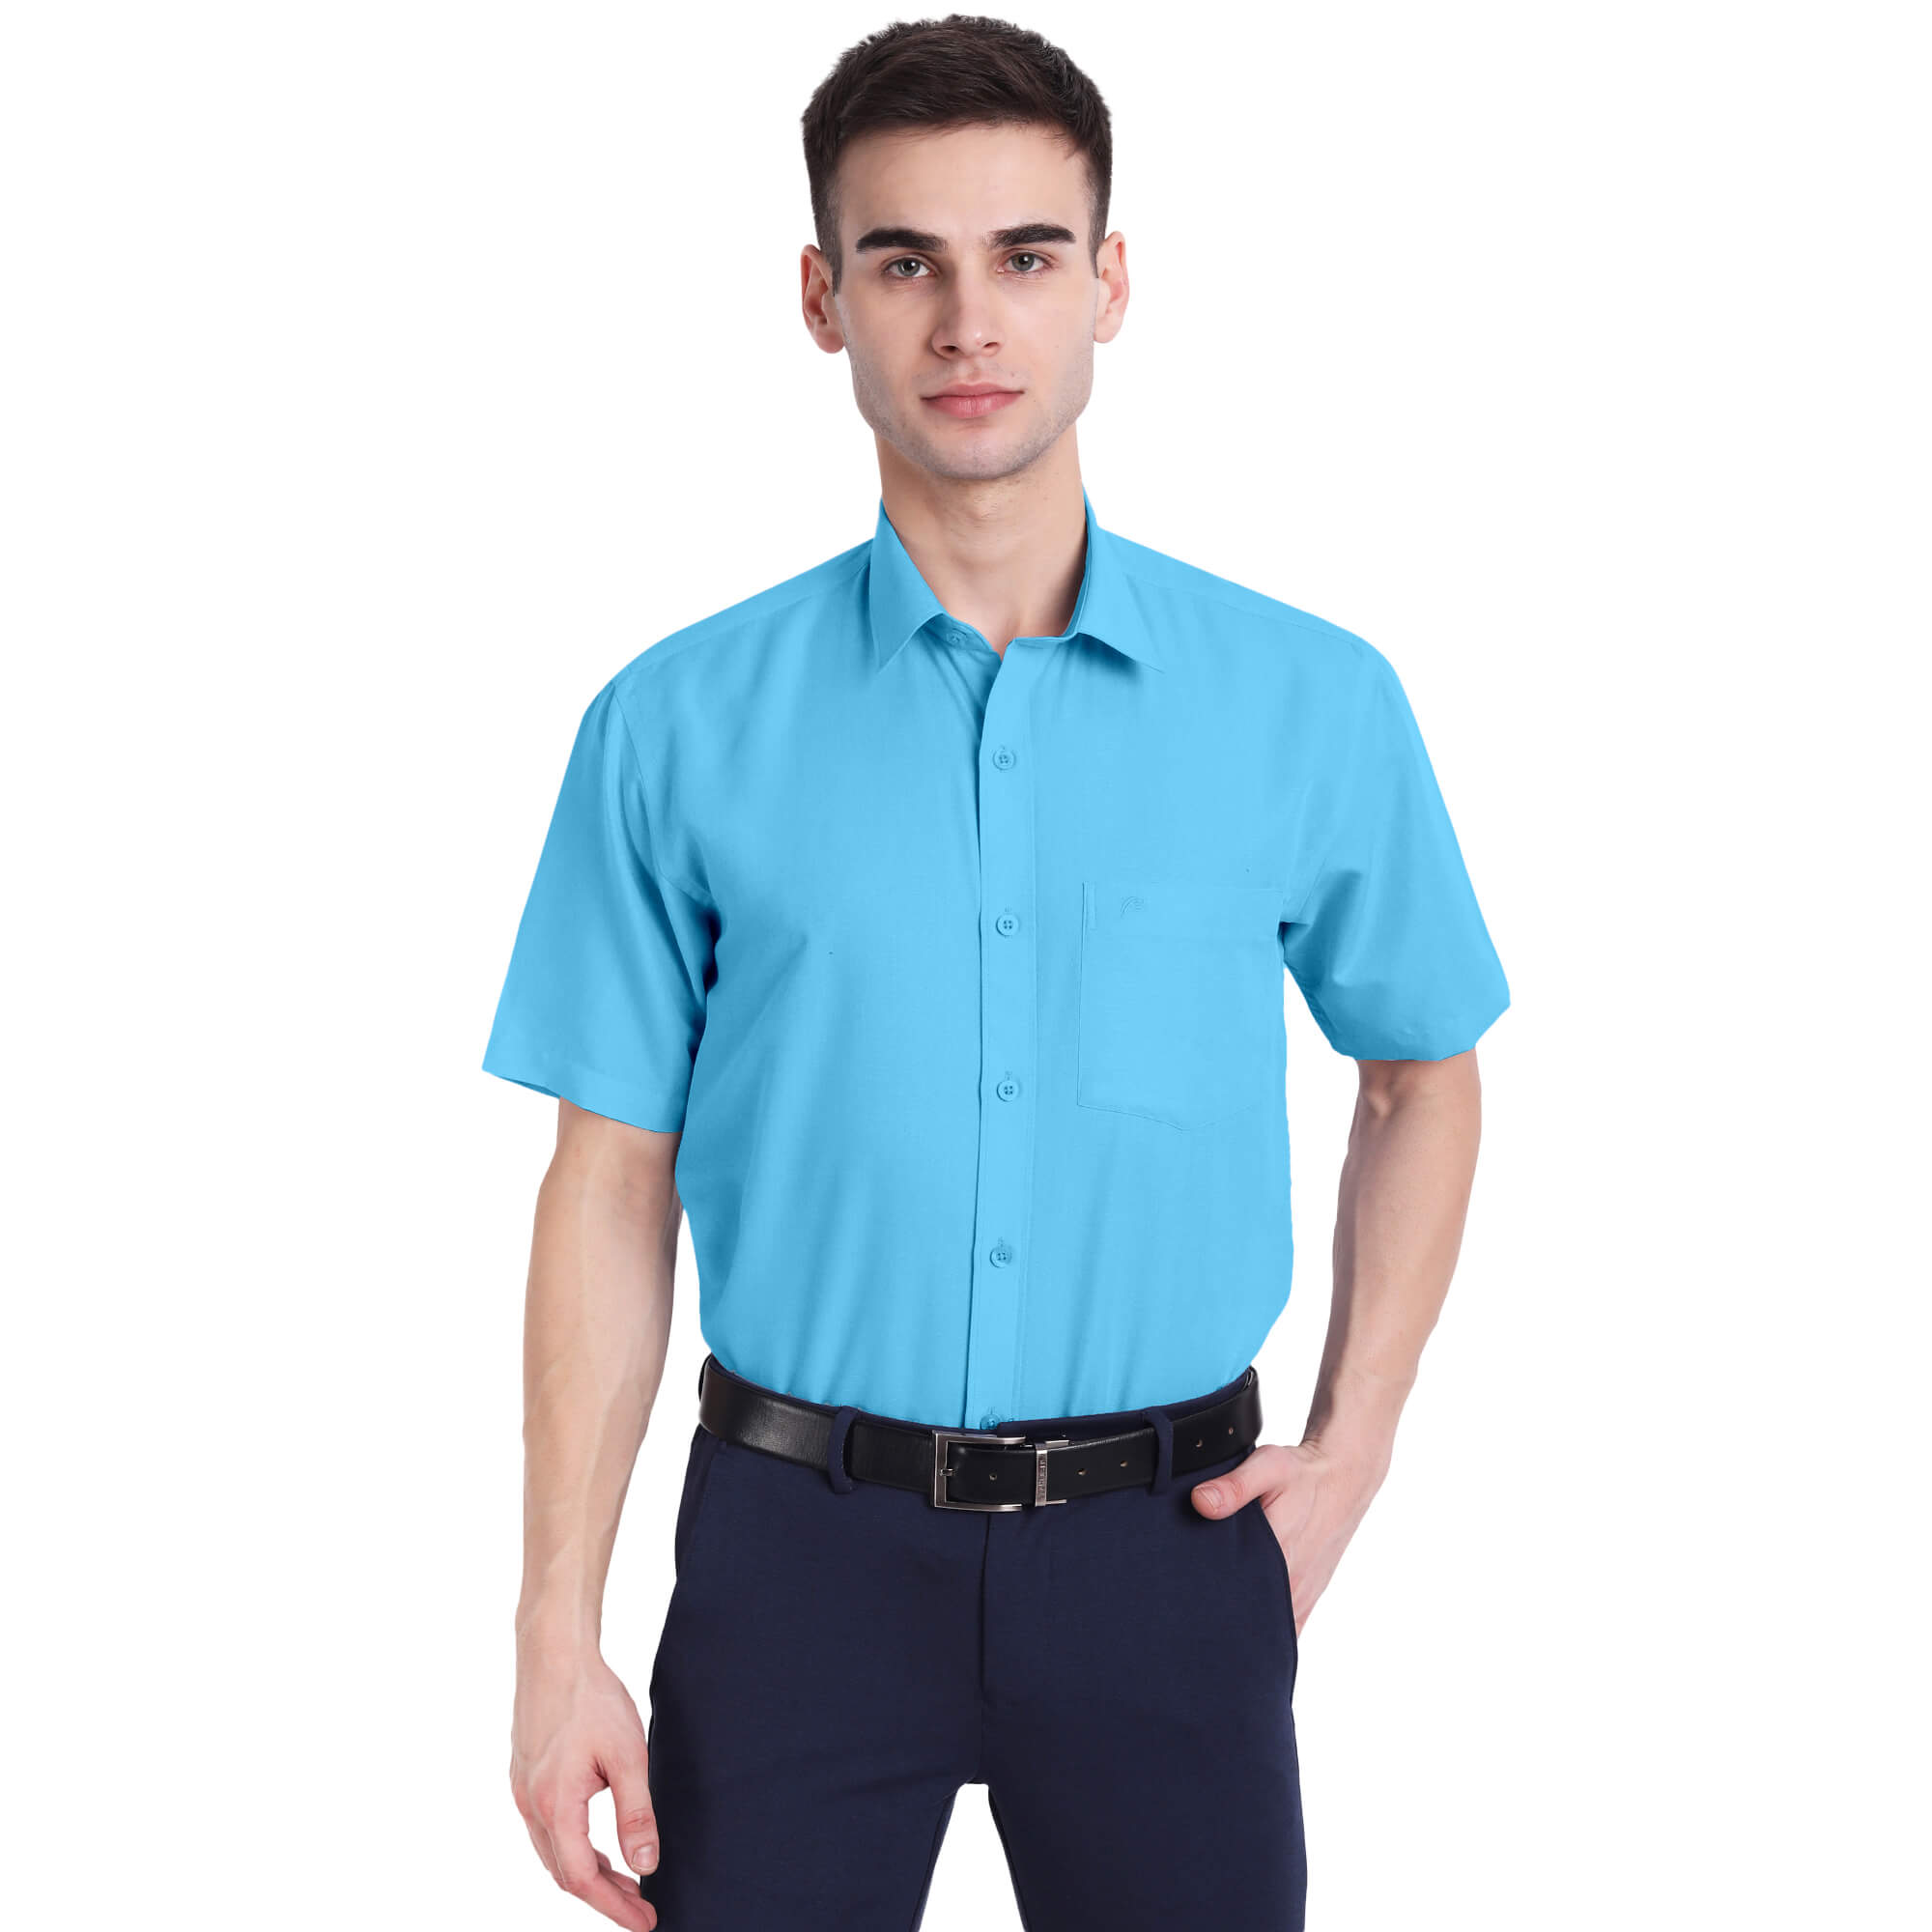 Poomer Elite Colour Shirt - Blue